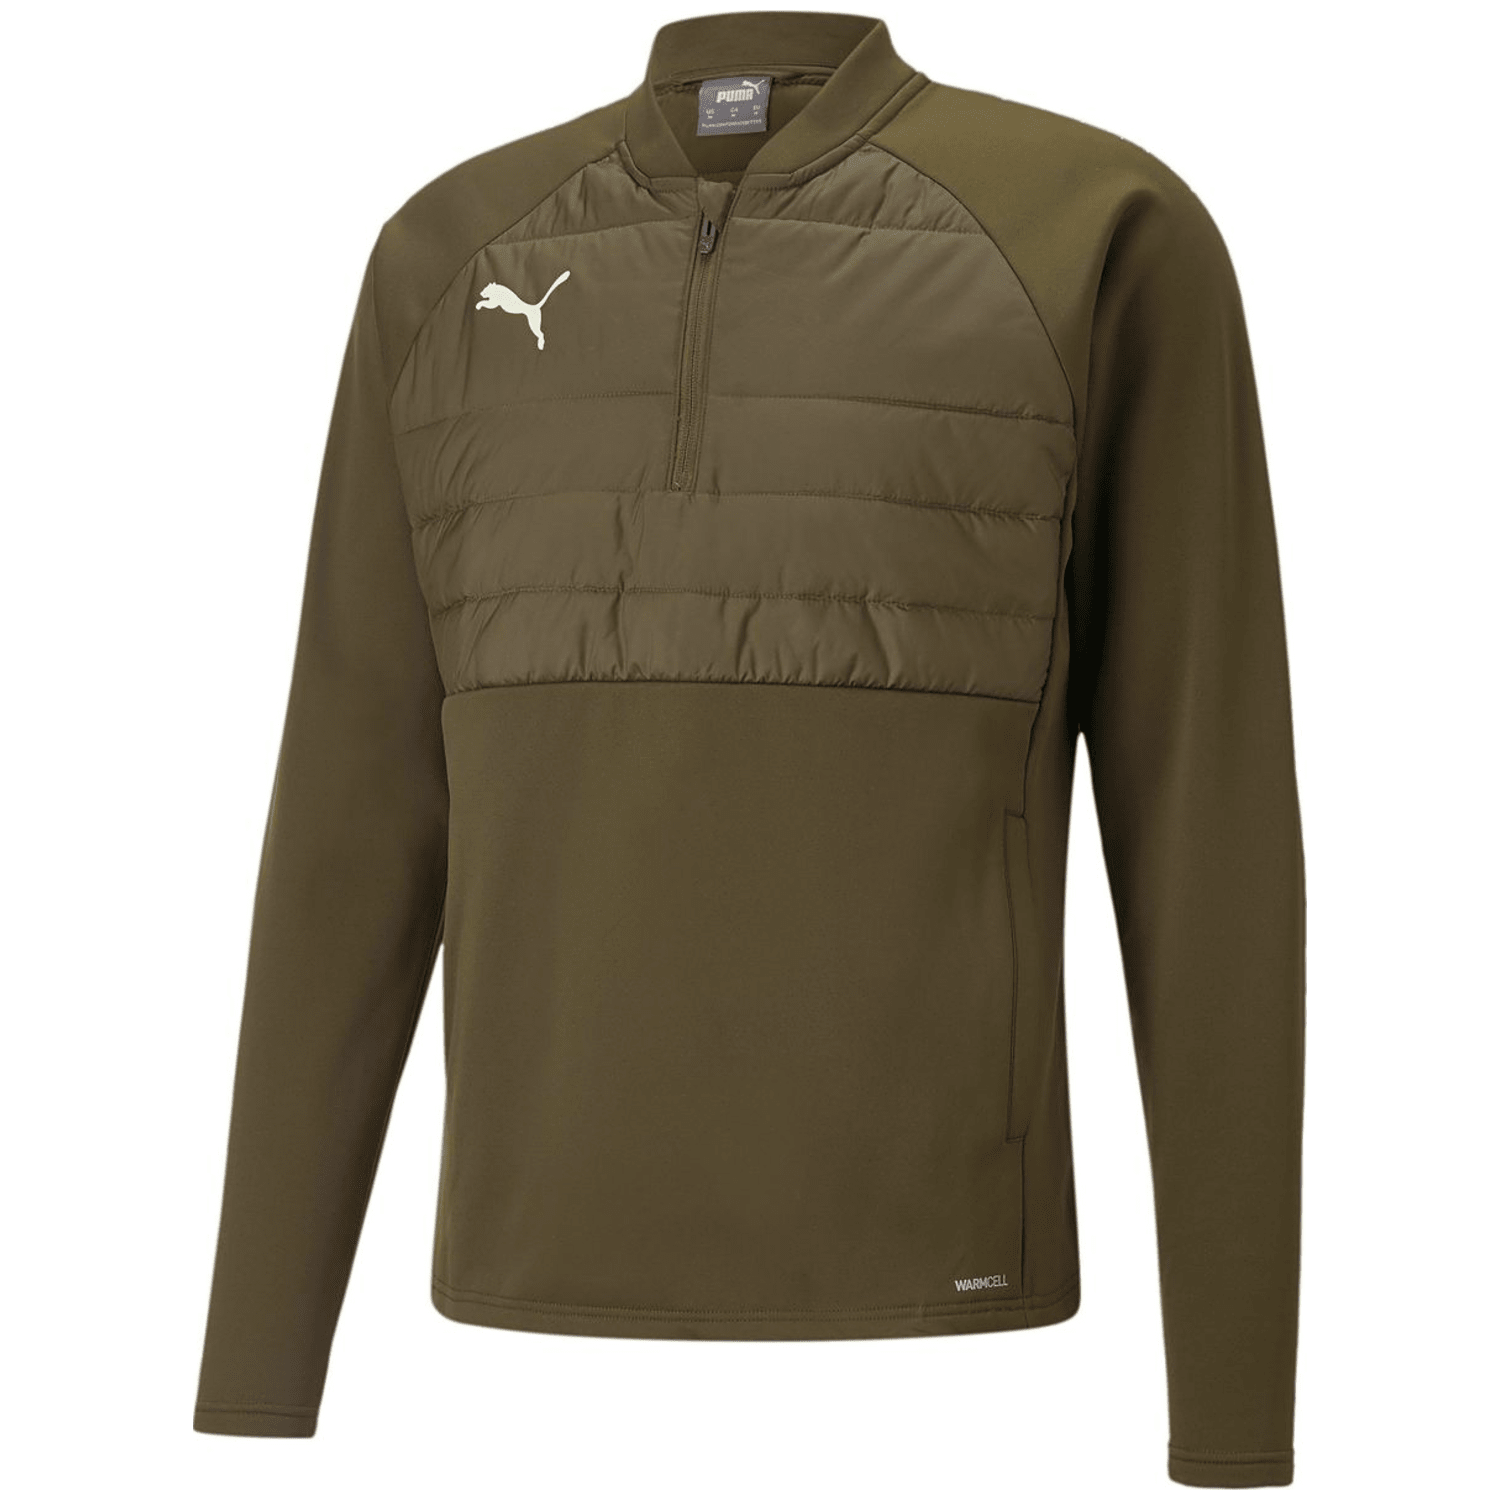 Puma IndividualLIGA Hybrid Top Herren Sweatshirt